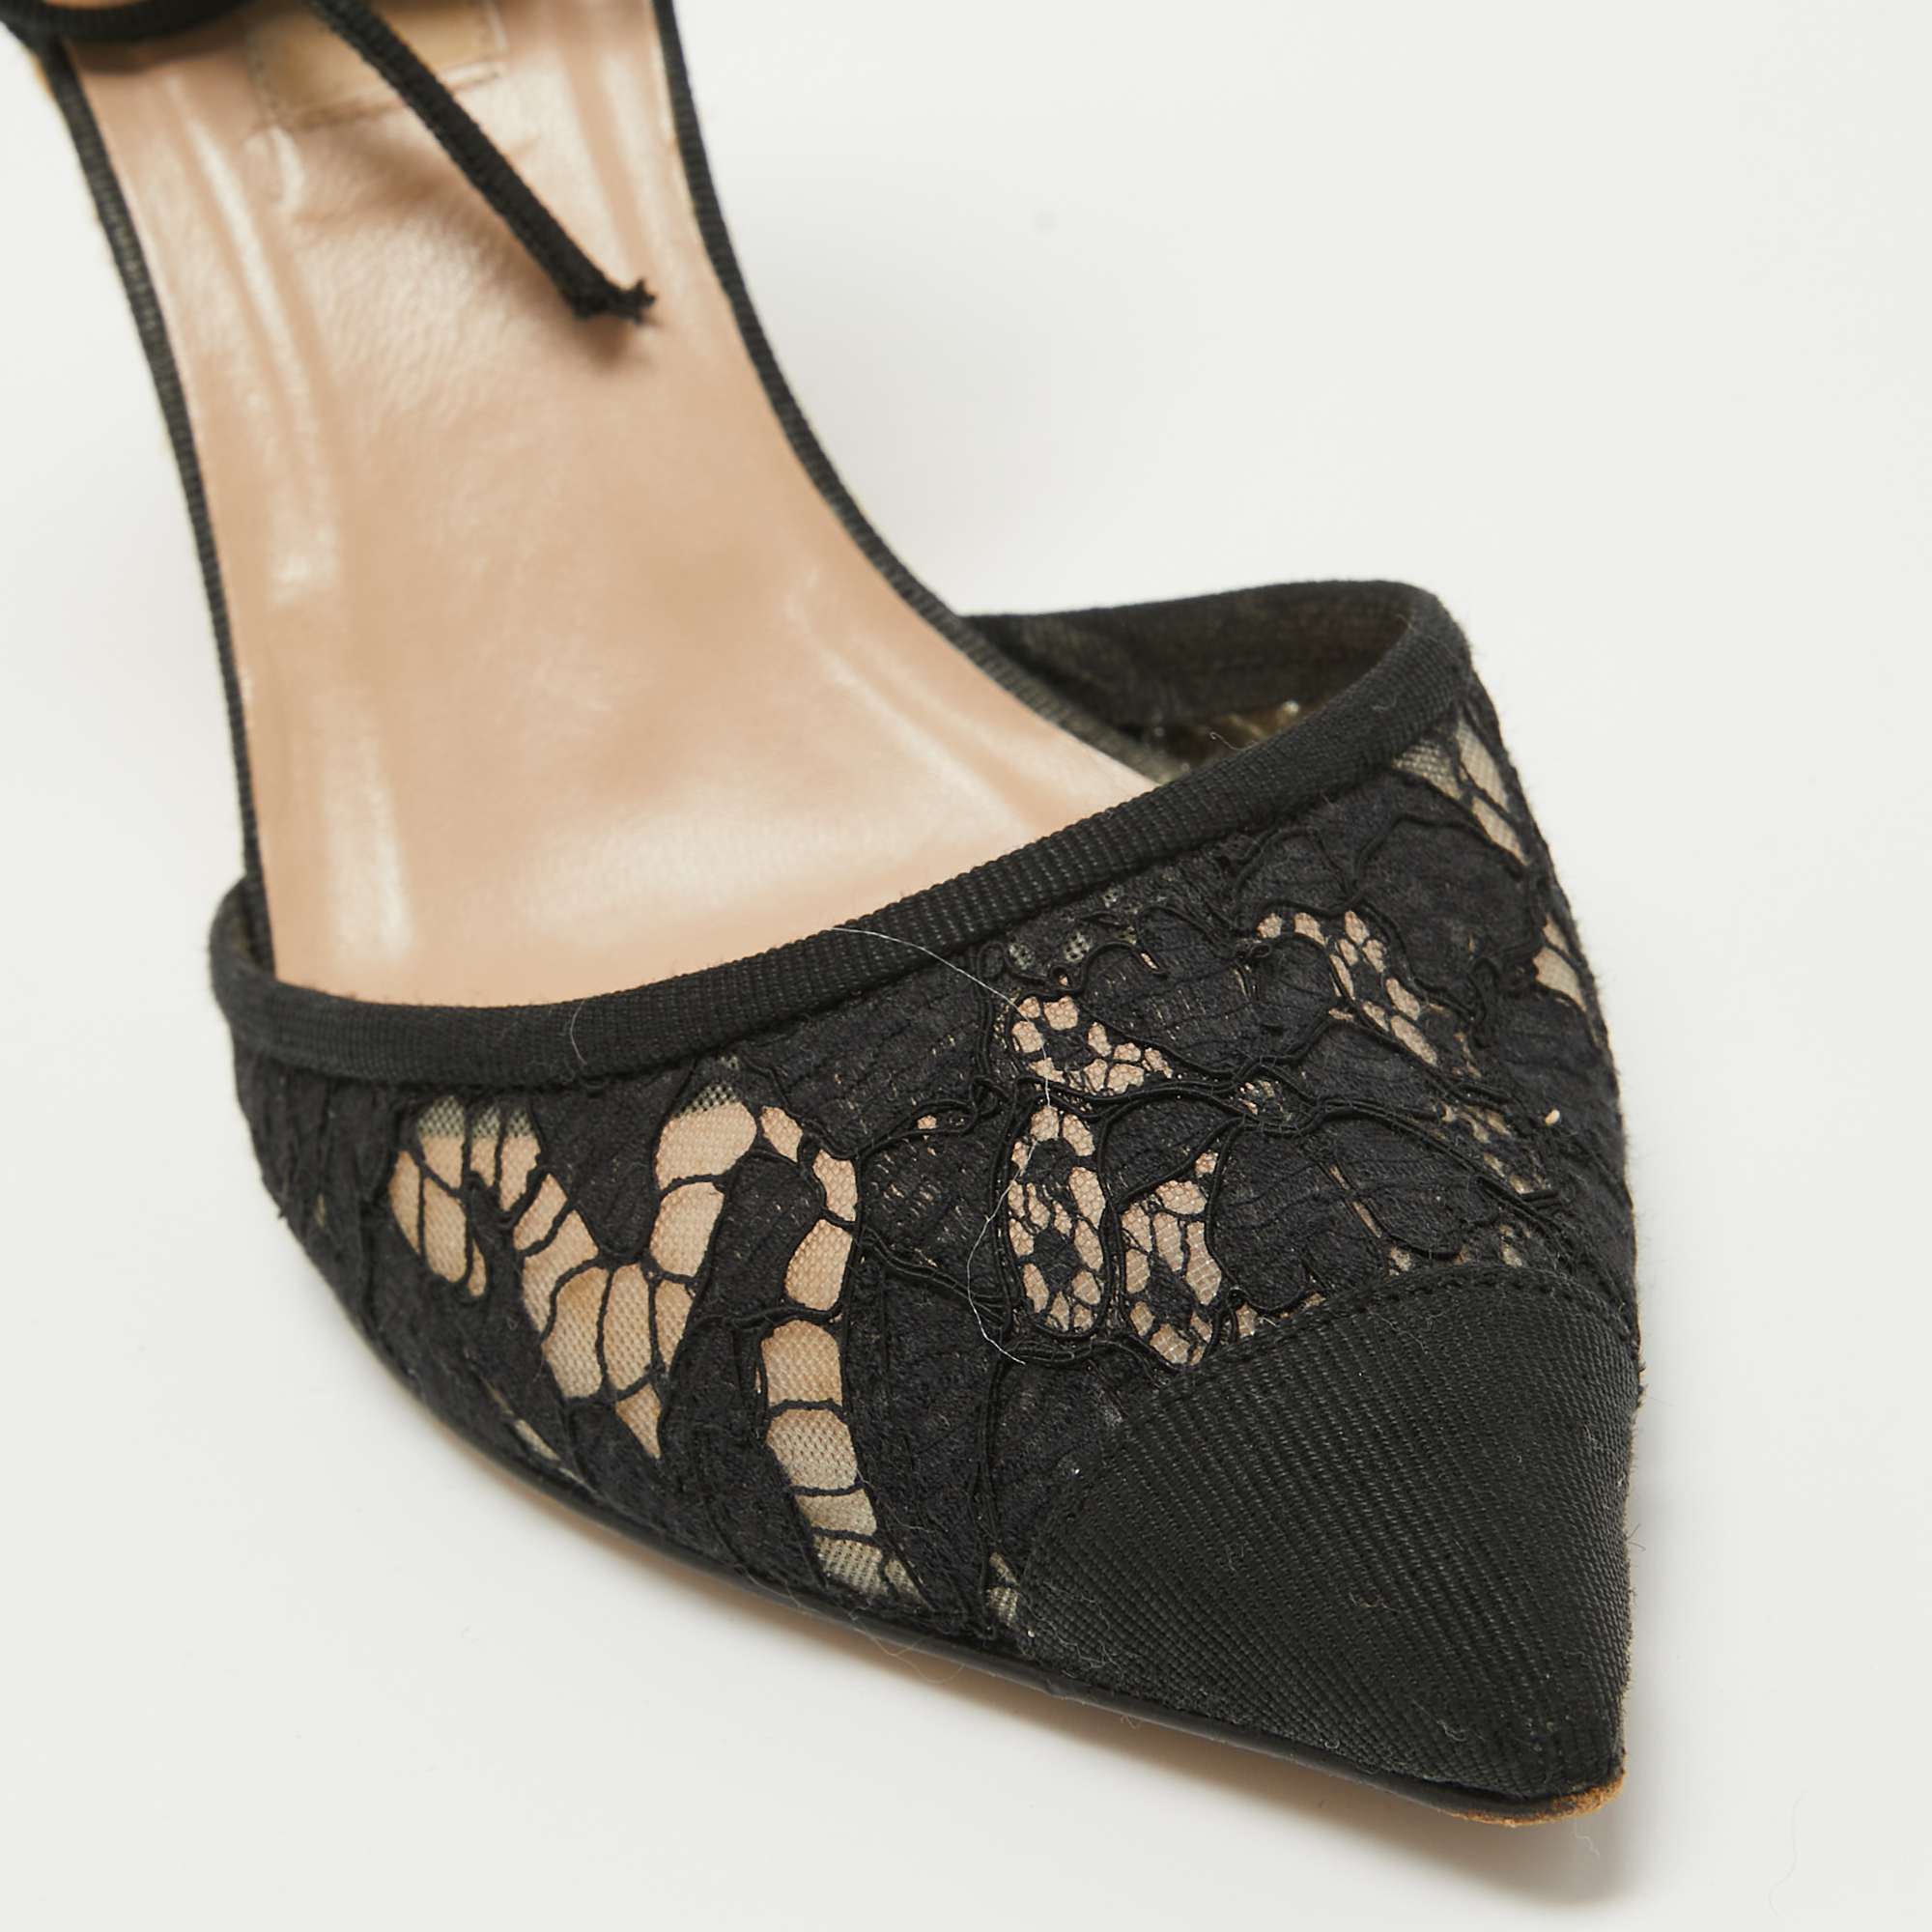 Valentino Black Lace Esparille Wedge Ankle Tie Pumps Size 39